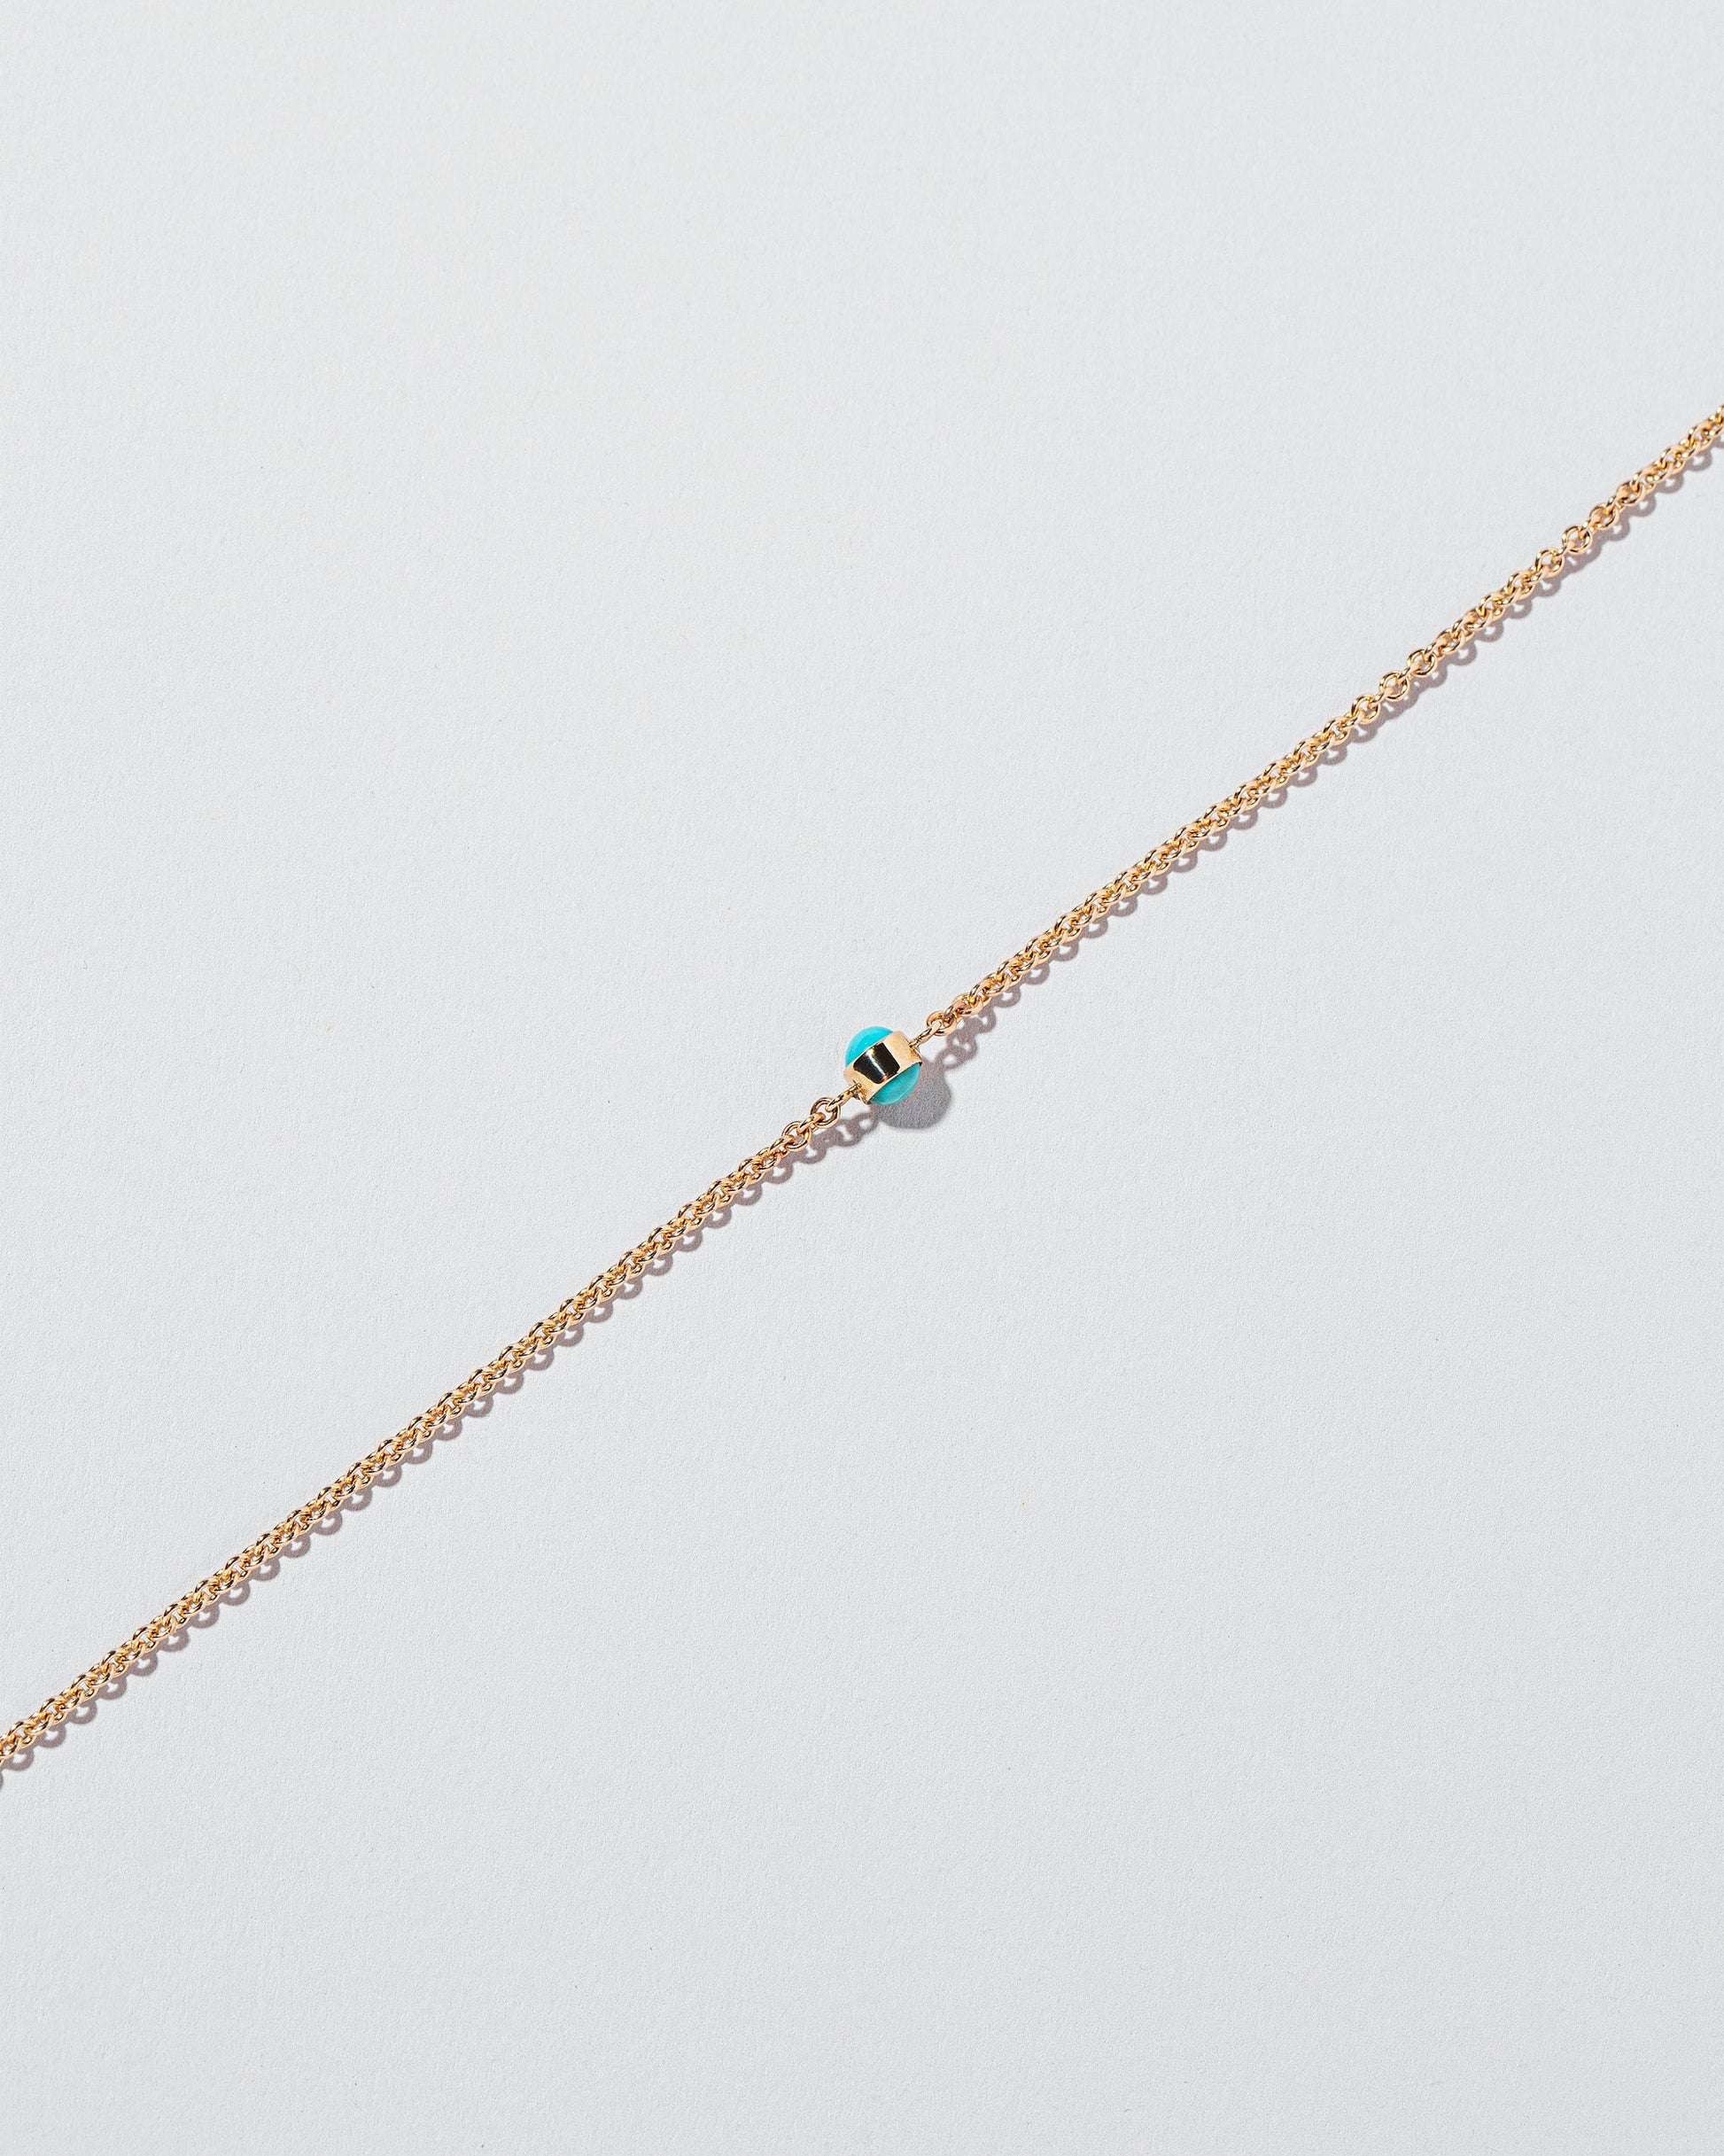  Birthstone Bracelet - One Bezel on light color background.